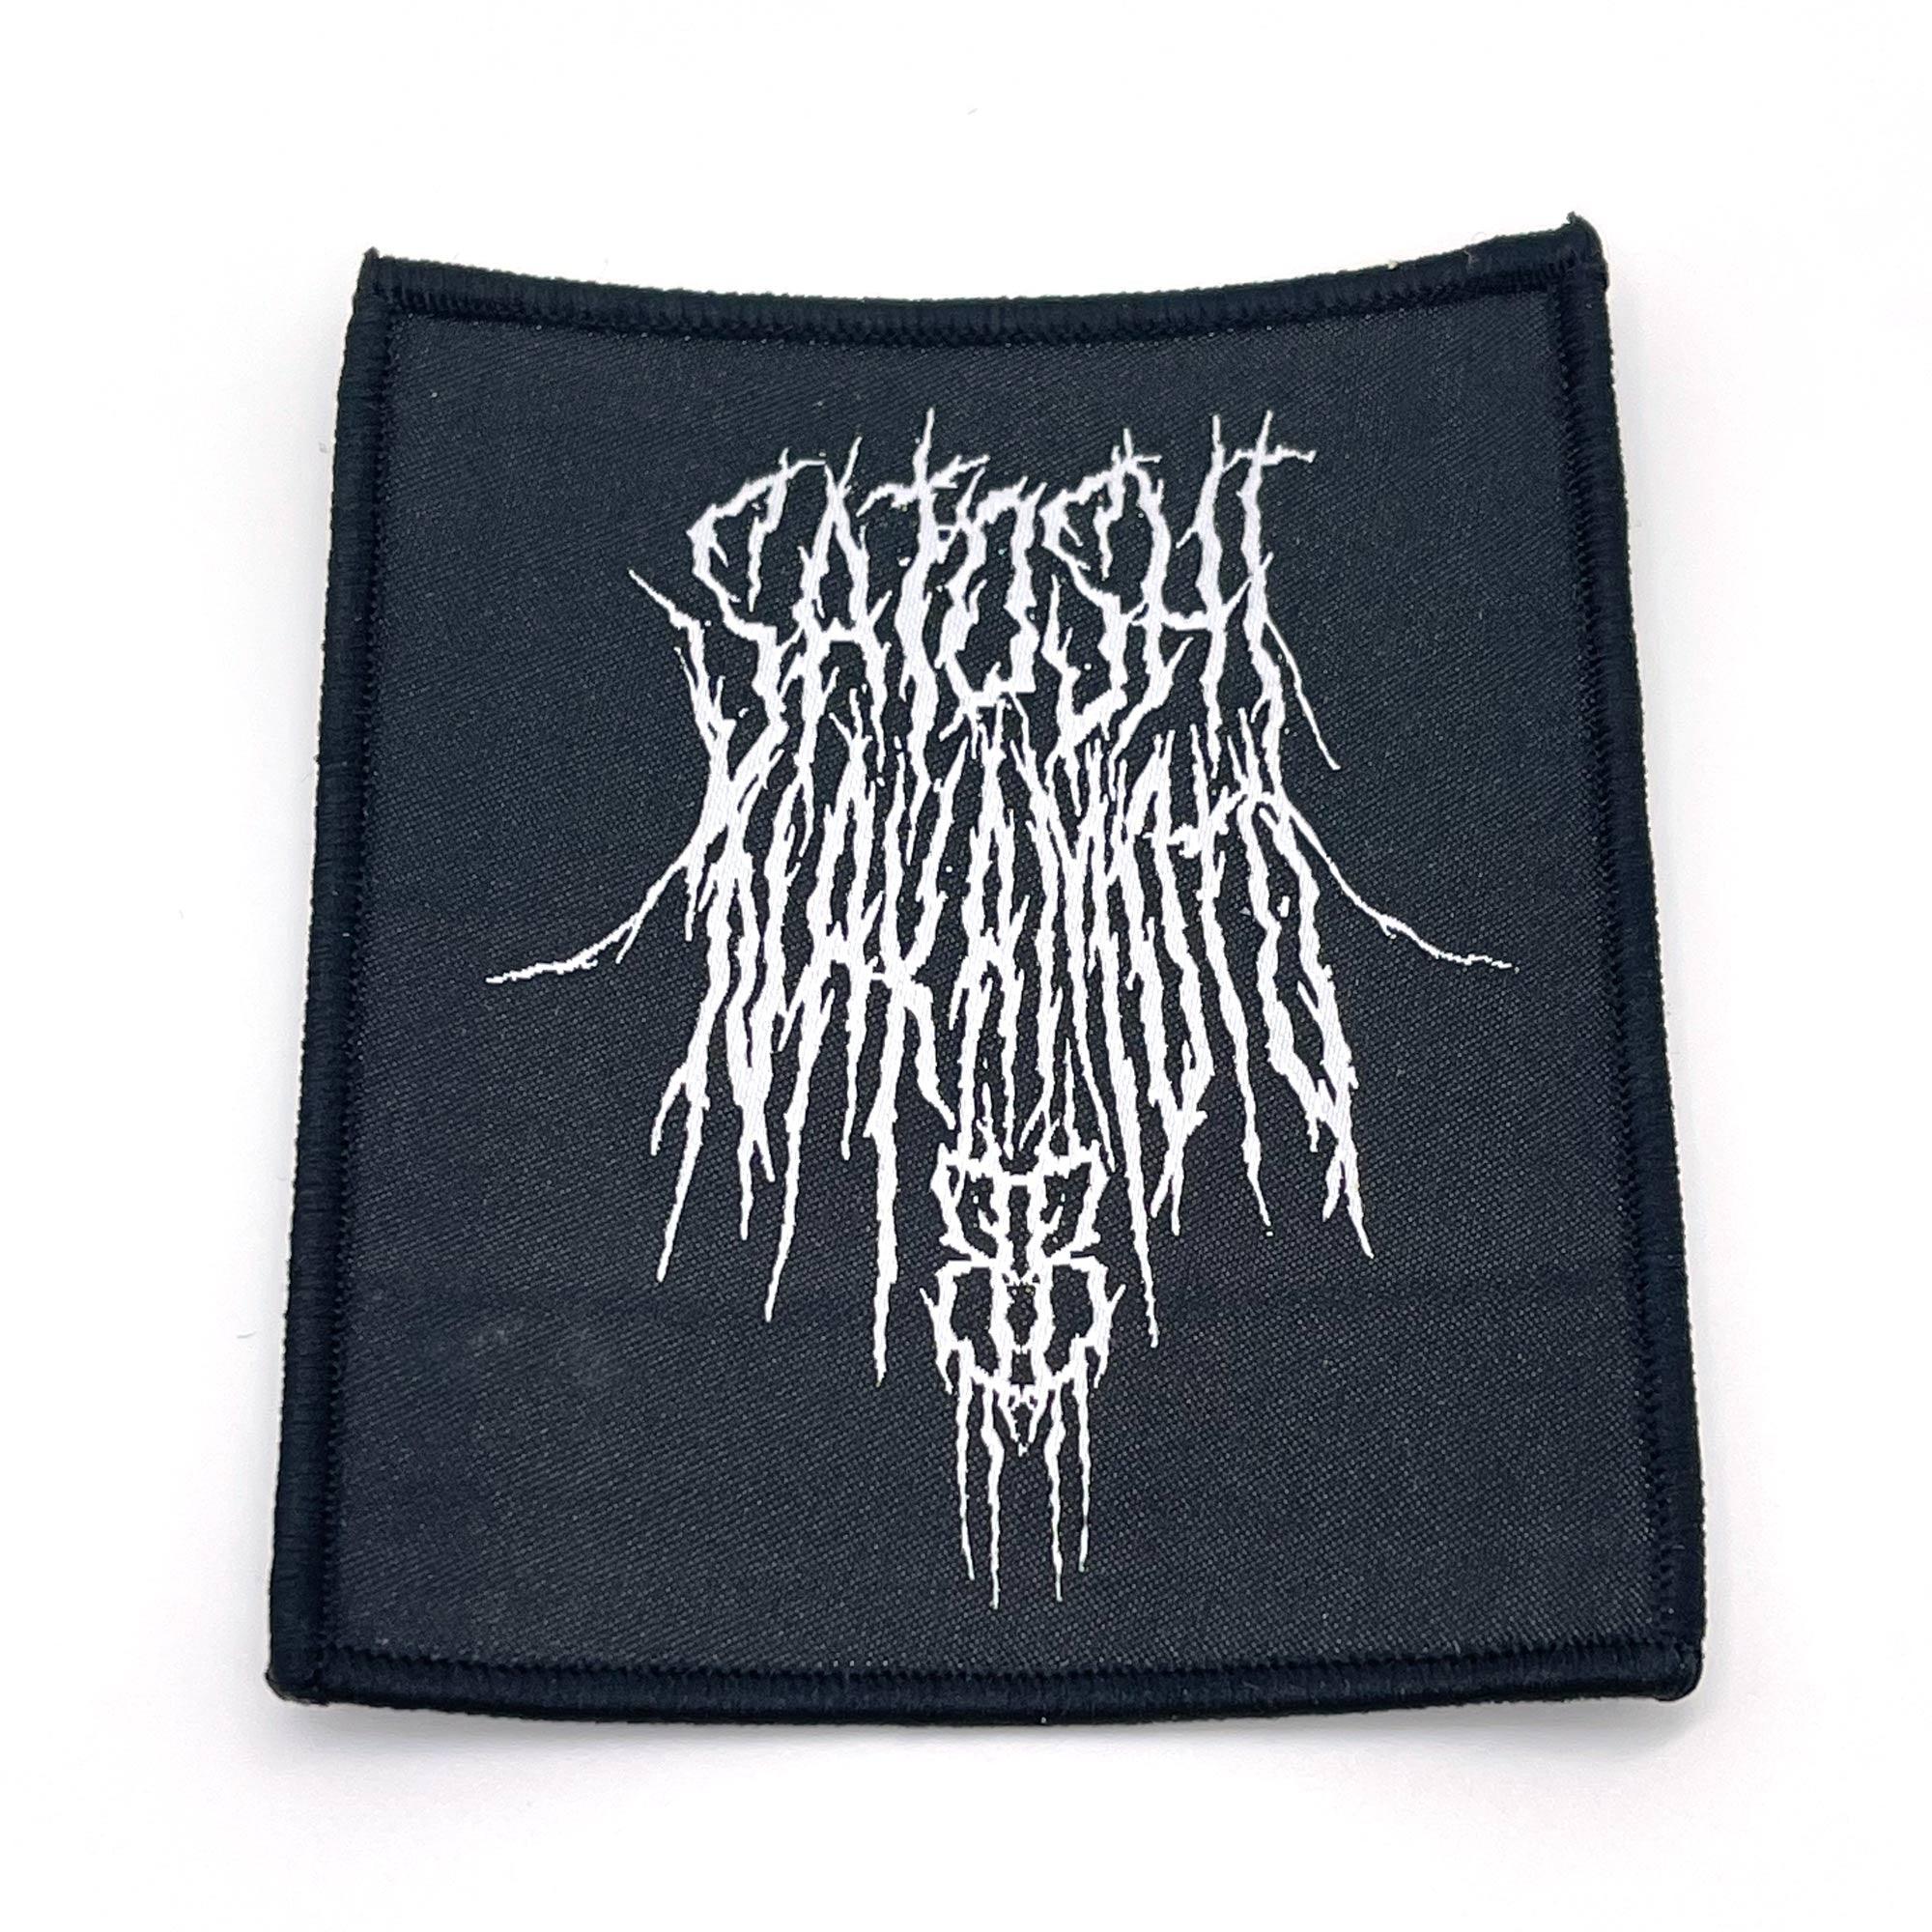 Satoshi Nakamoto Death Metal Patch - No System